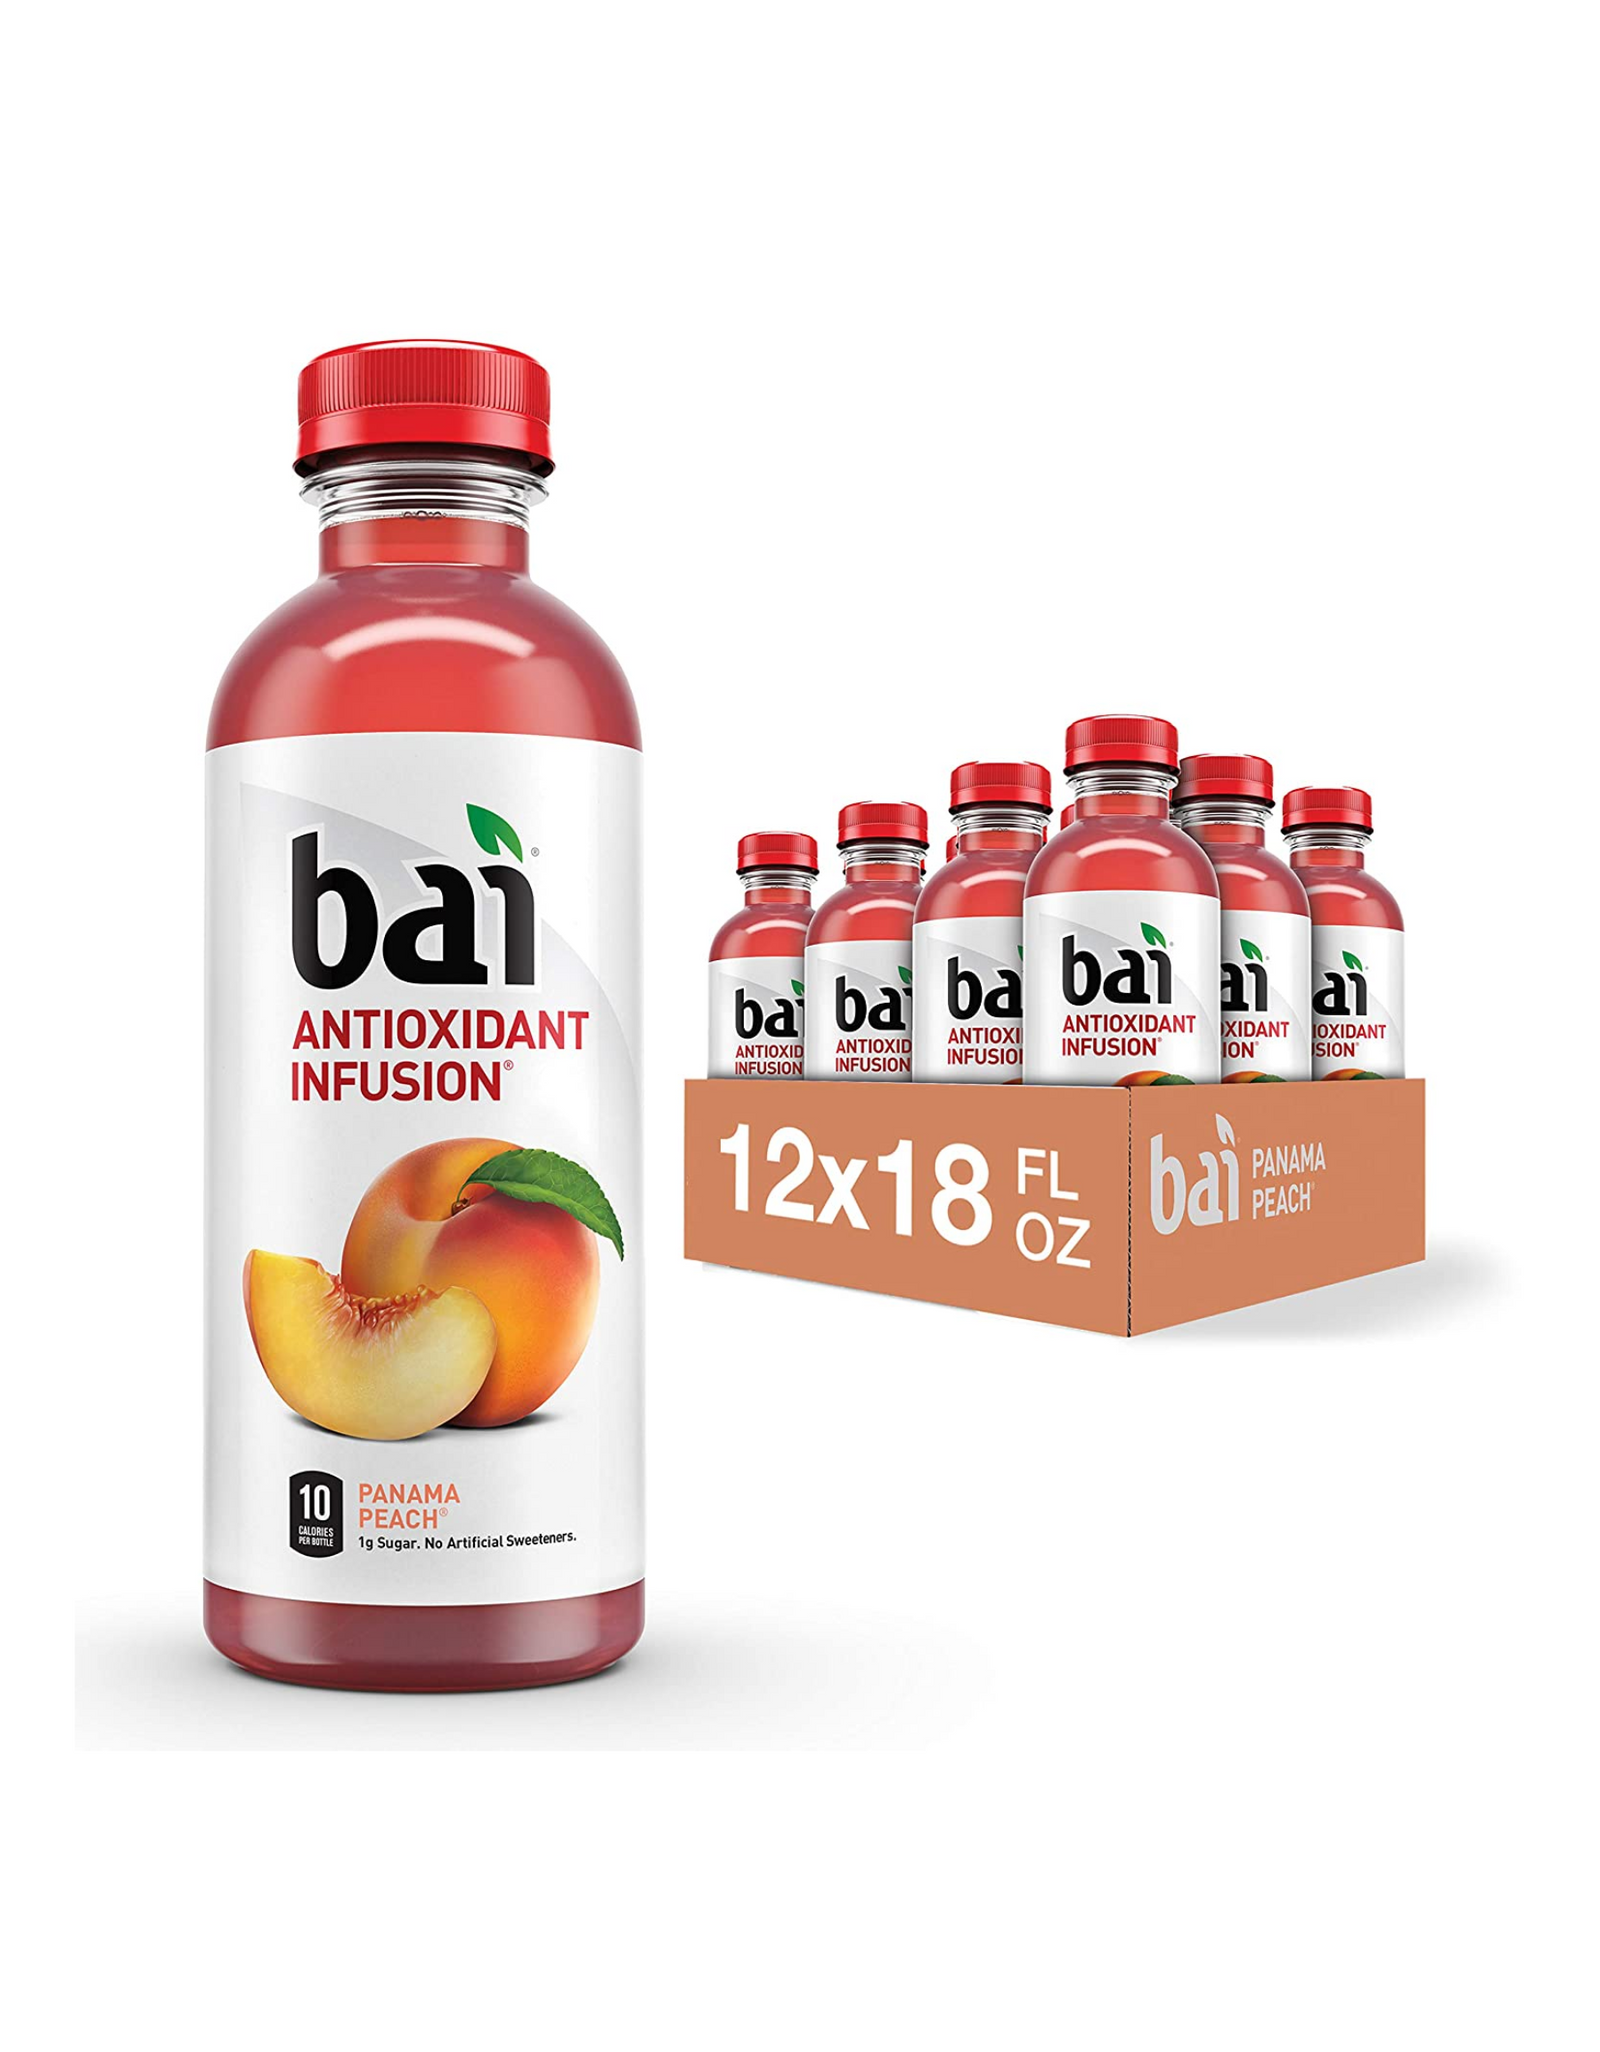 Bai Flavored Water, Antioxidant Infused Drinks, Panama Peach, 18 fl oz (Pack of 12)